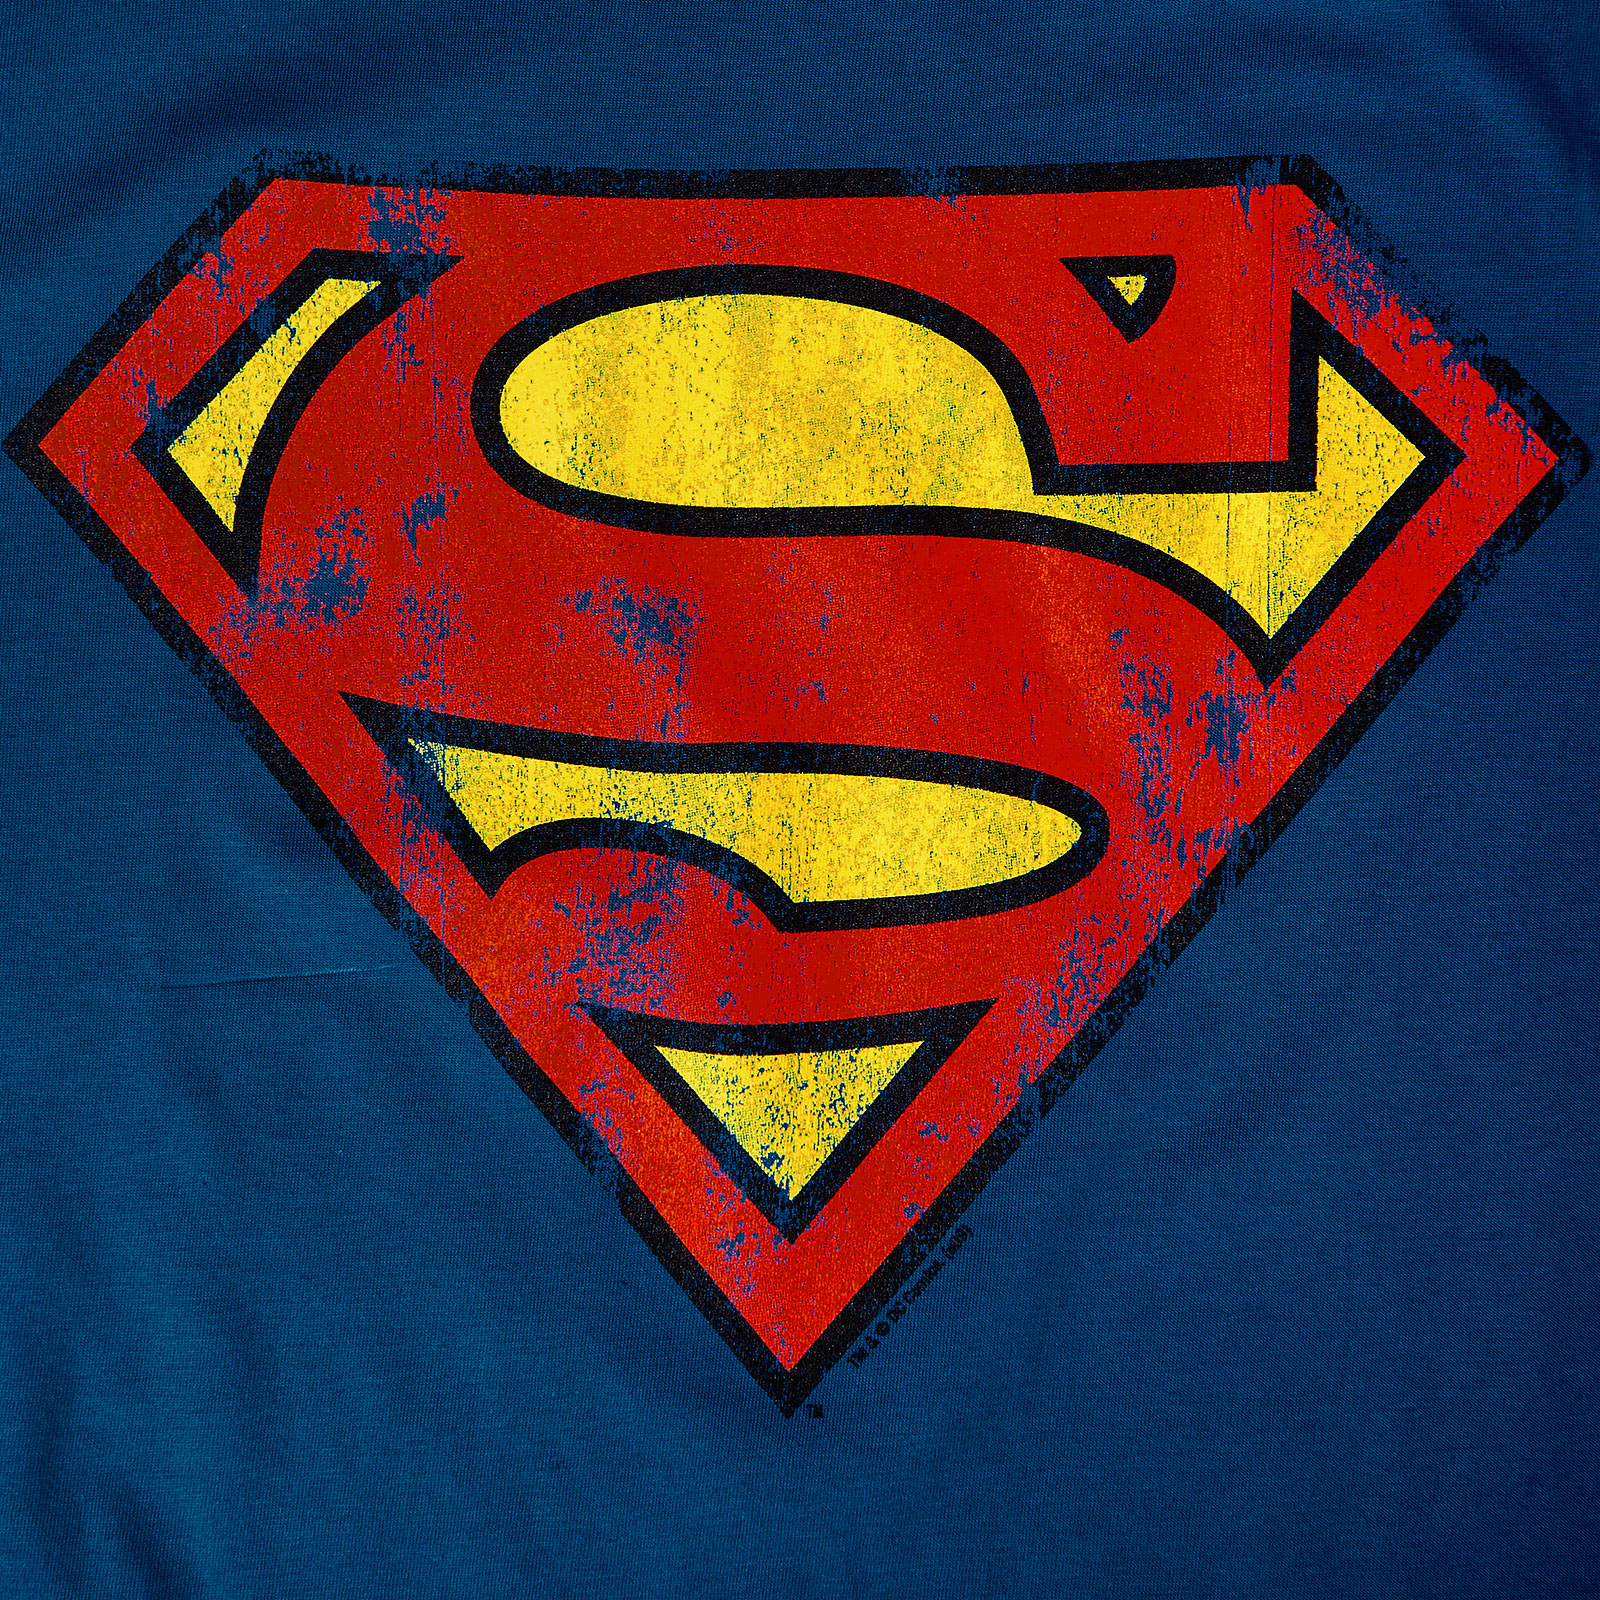 Superman - Distressed Logo T-Shirt blau